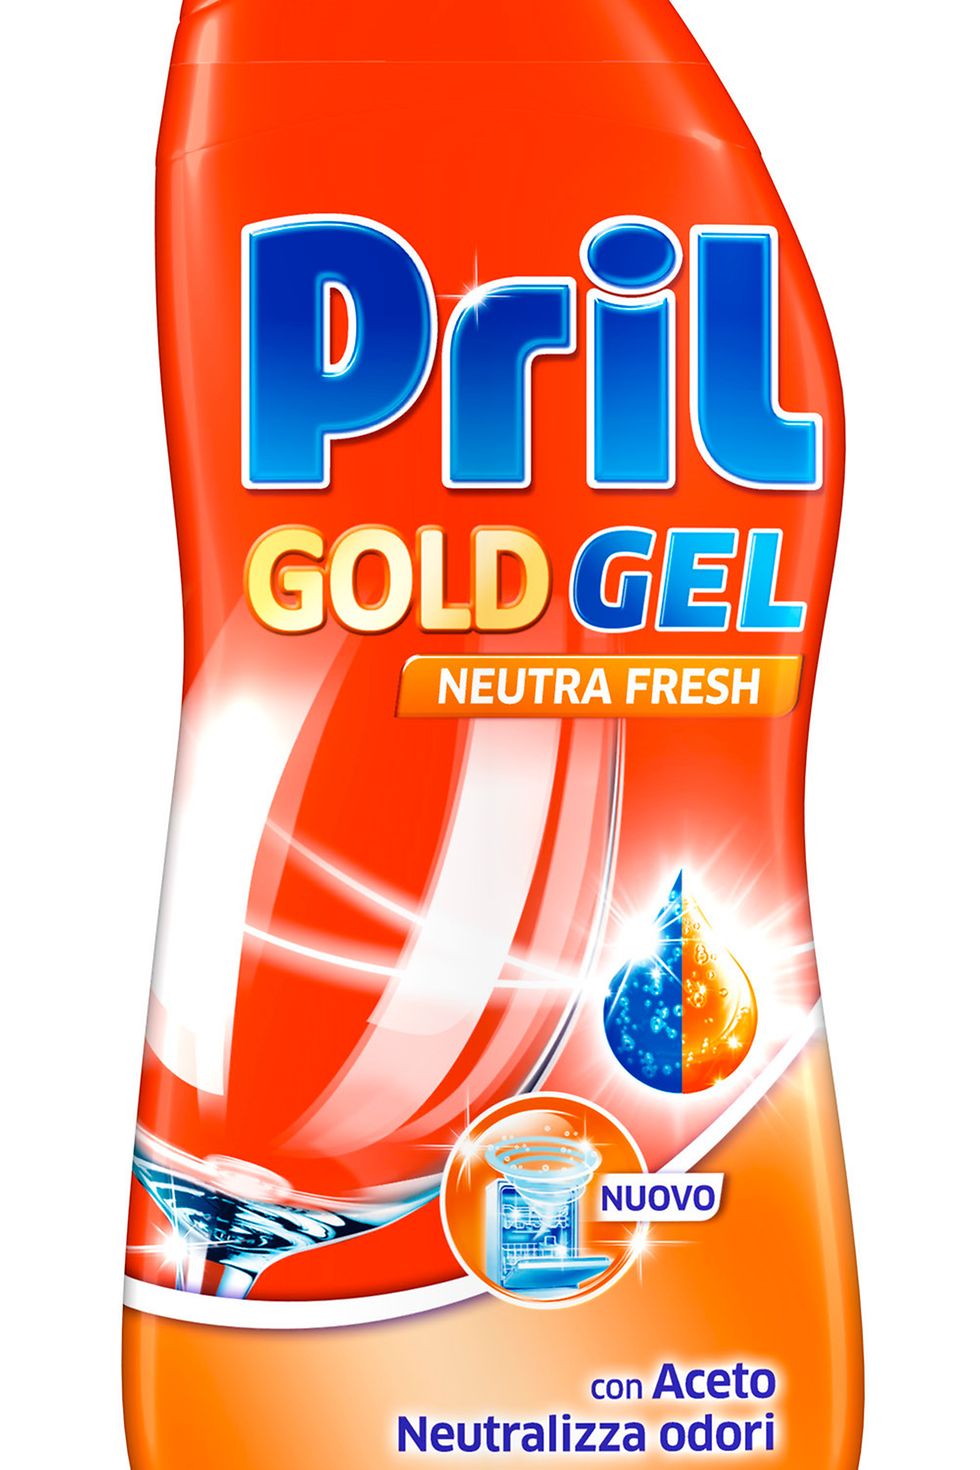 Pril Gold Gel Neutra-Fresh